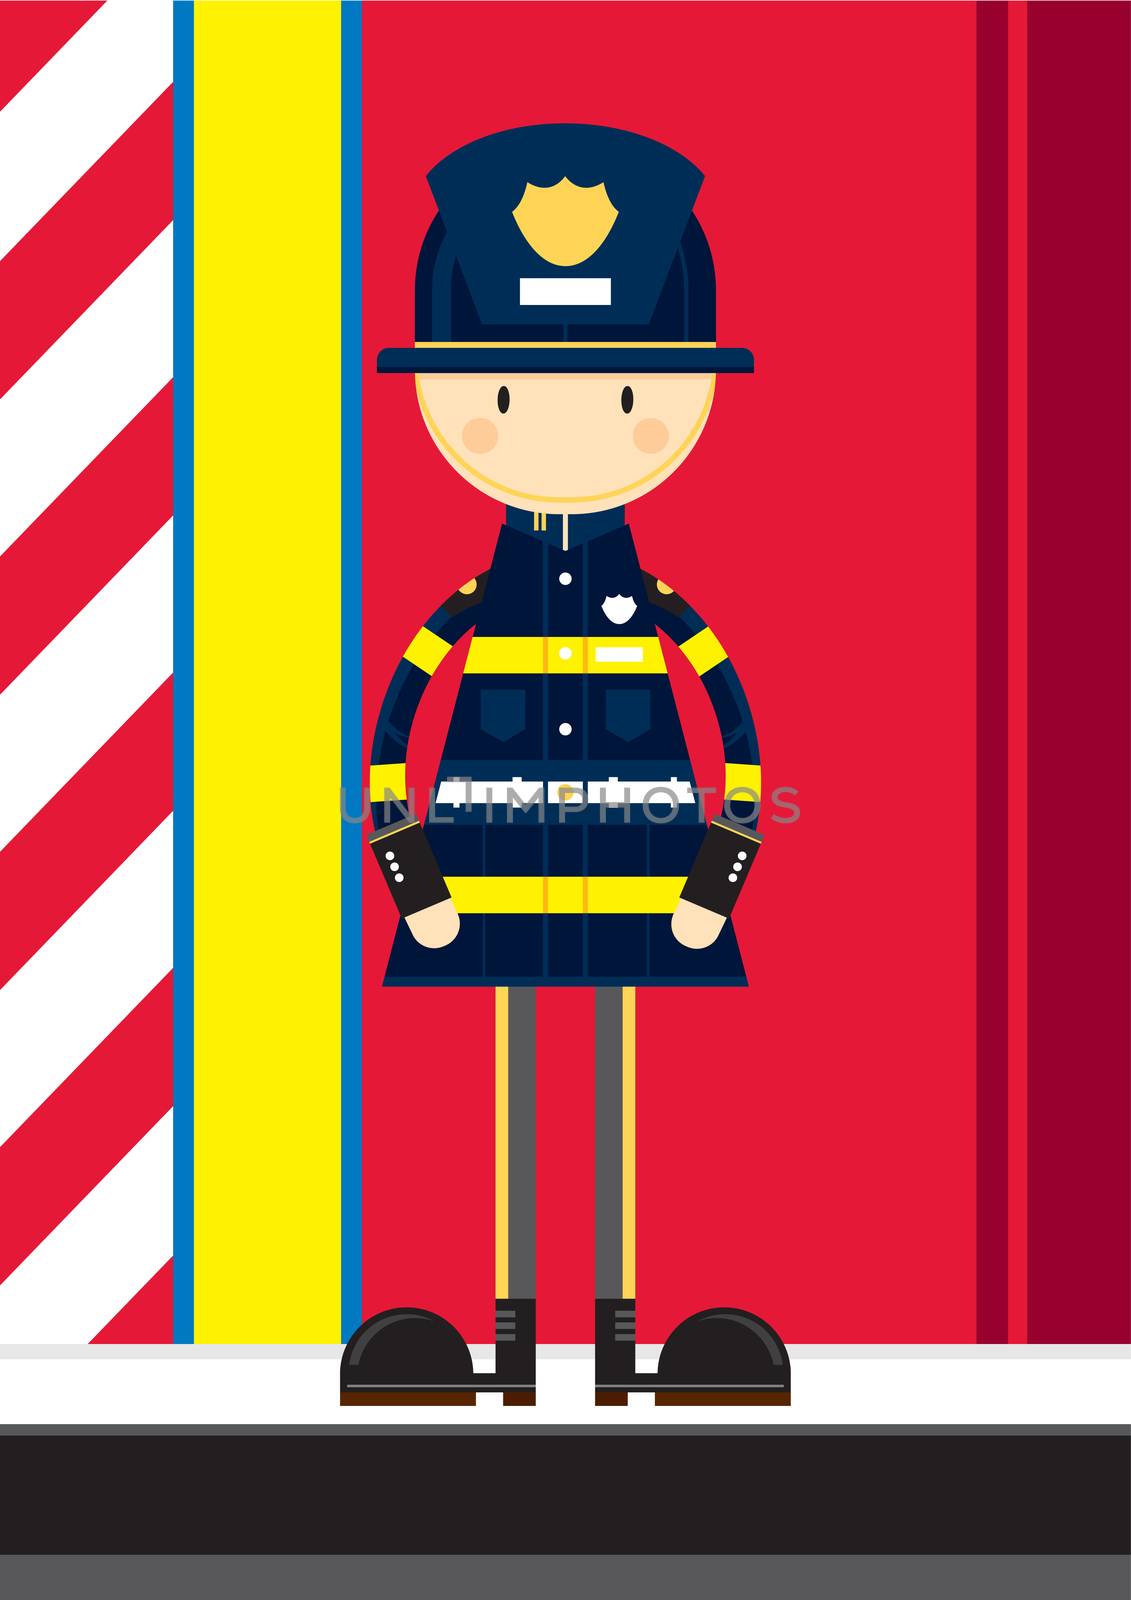 Cute Cartoon Firefighter Illustration by Mark Murphy Creative